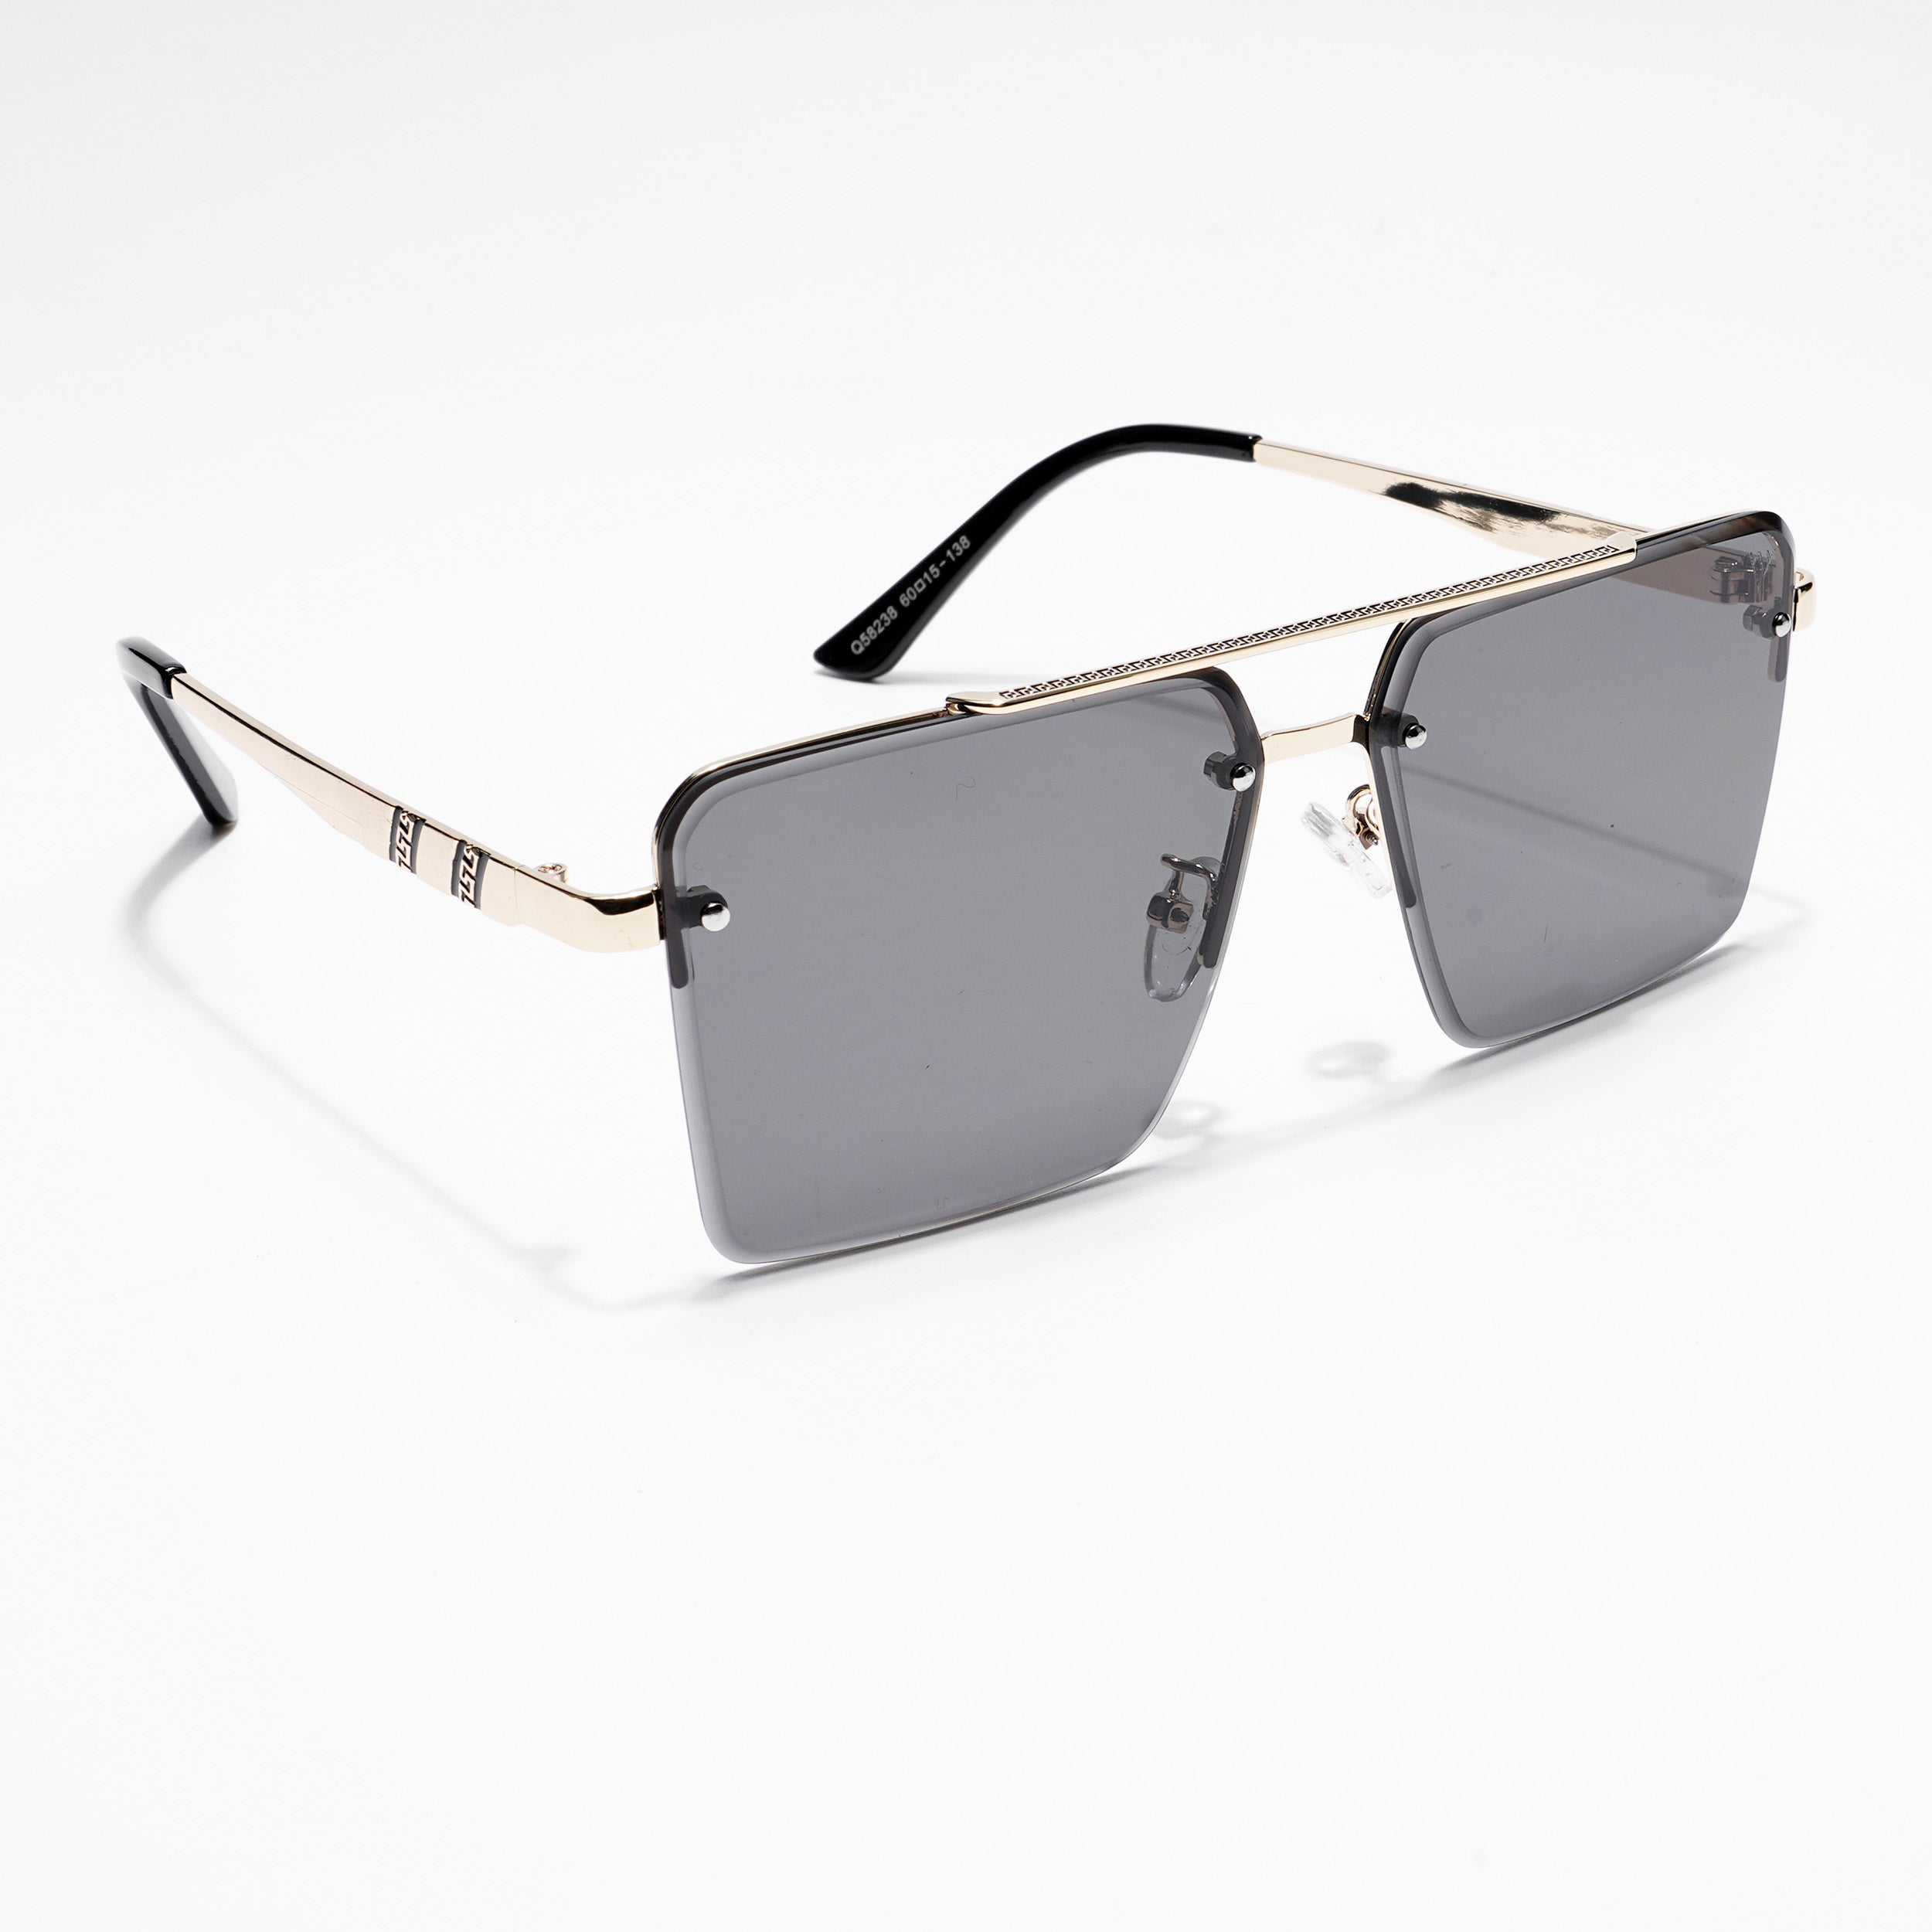 Voyage Black Wayfarer Sunglasses for Men & Women - MG4159